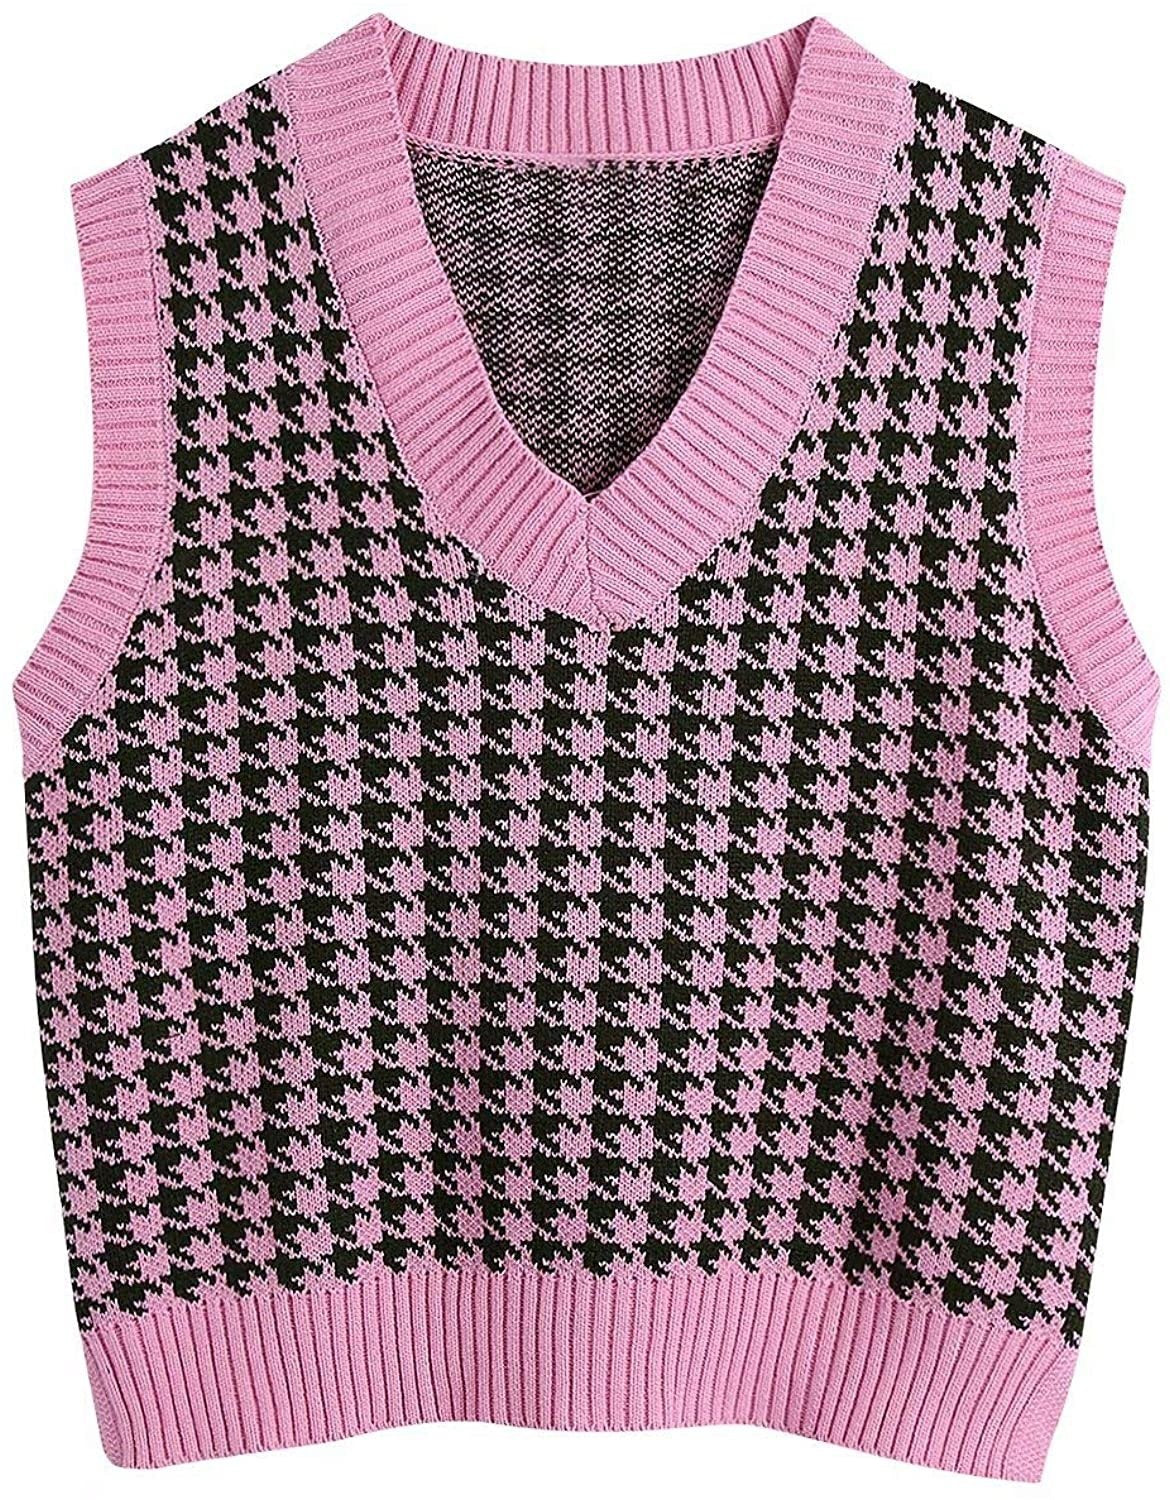 Fashion Sleeveless Women Knitting Vest